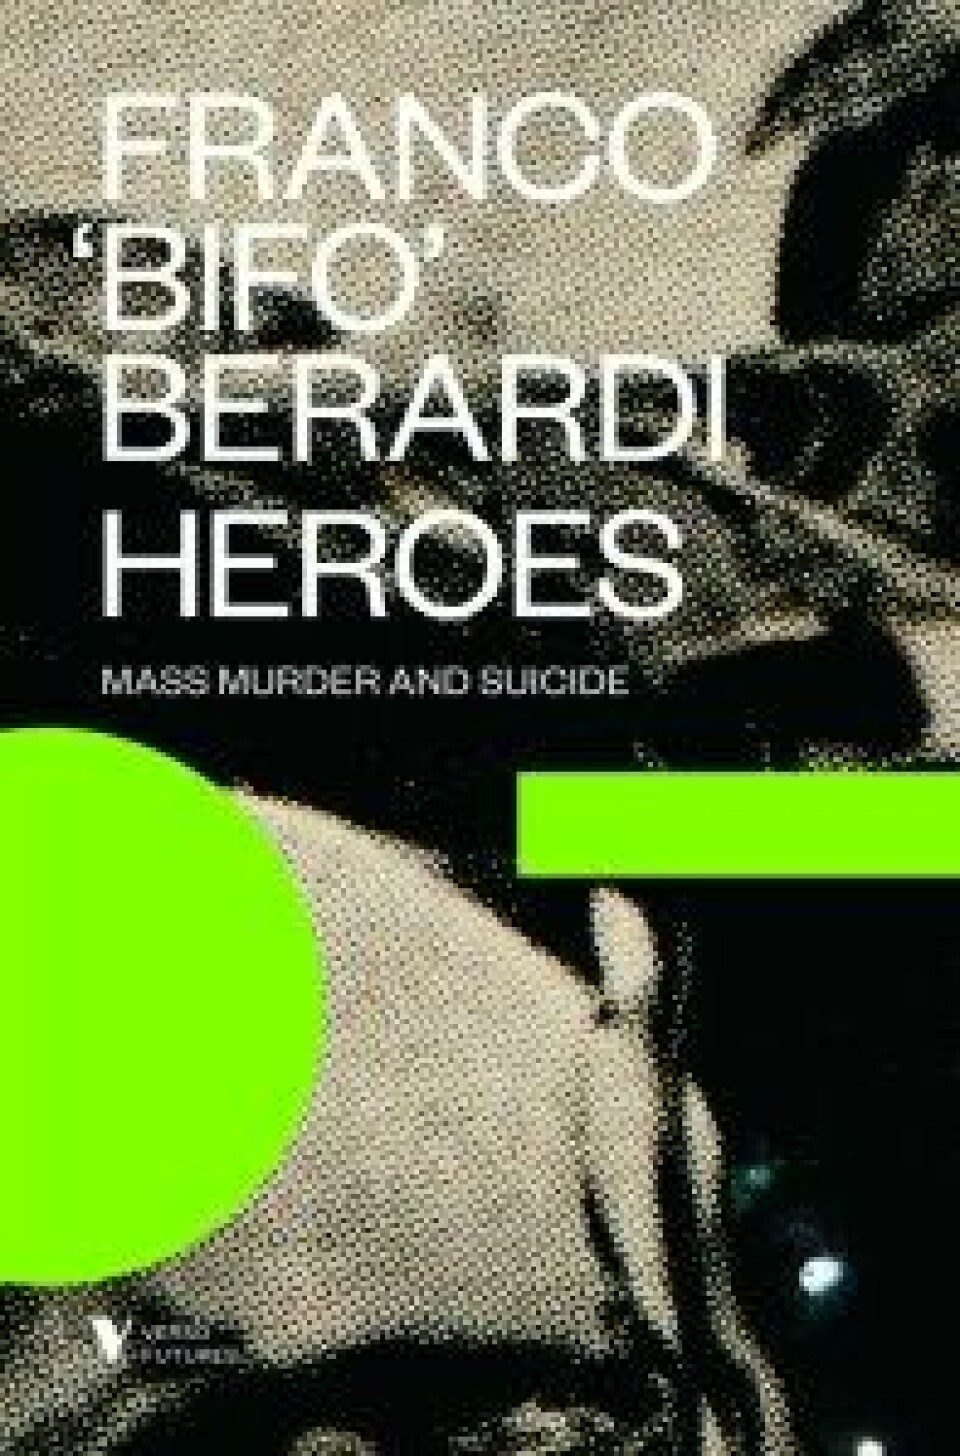 Berardi er aktuell med boken Heroes. Mass murder and suicide (2015)